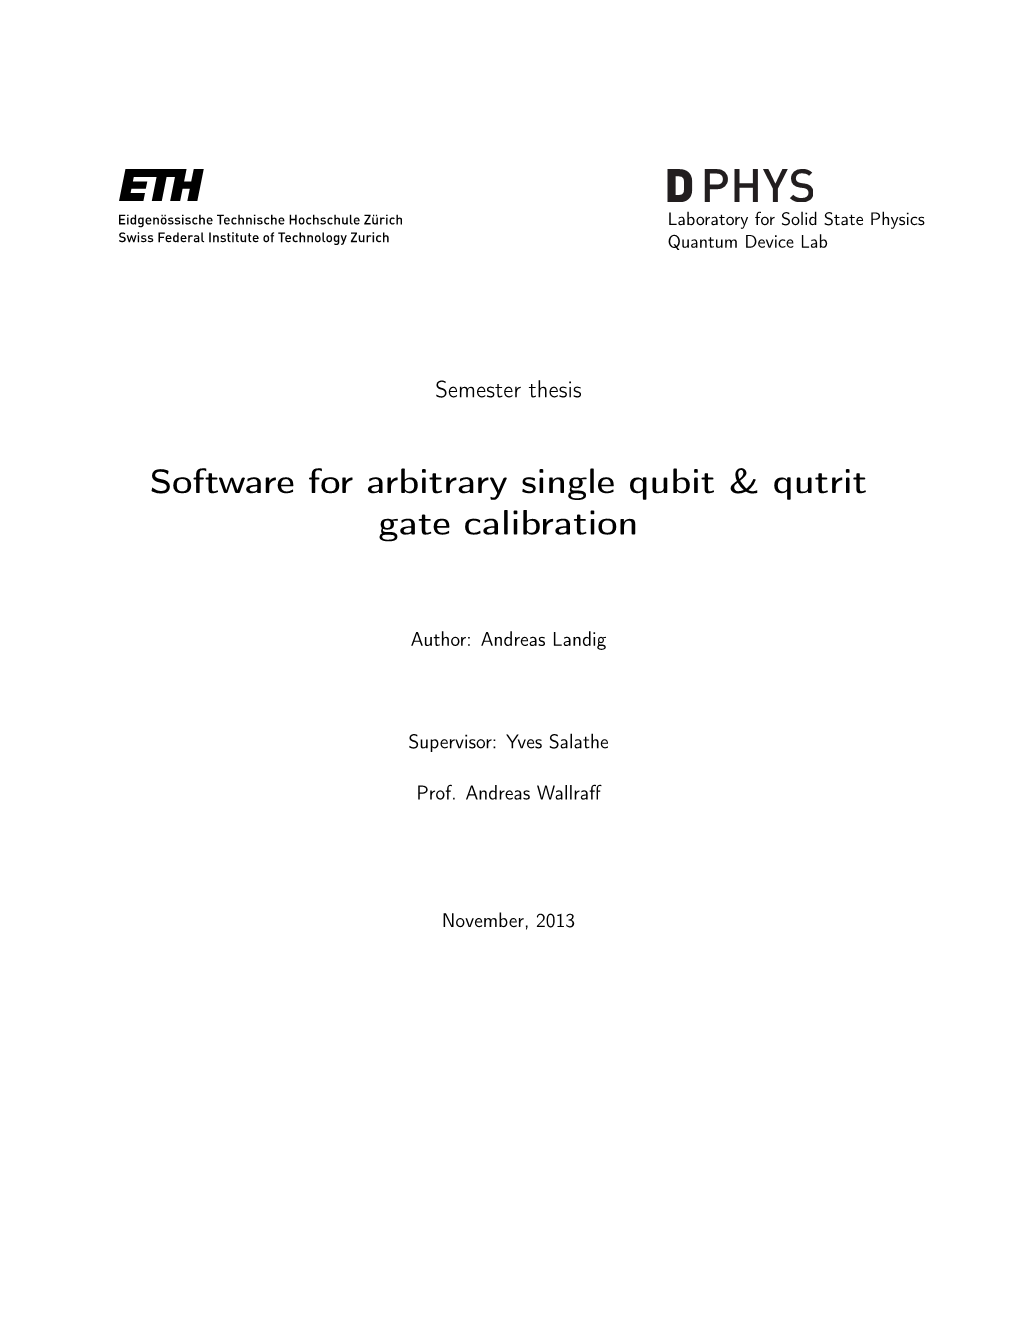 Software for Arbitrary Single Qubit & Qutrit Gate Calibration